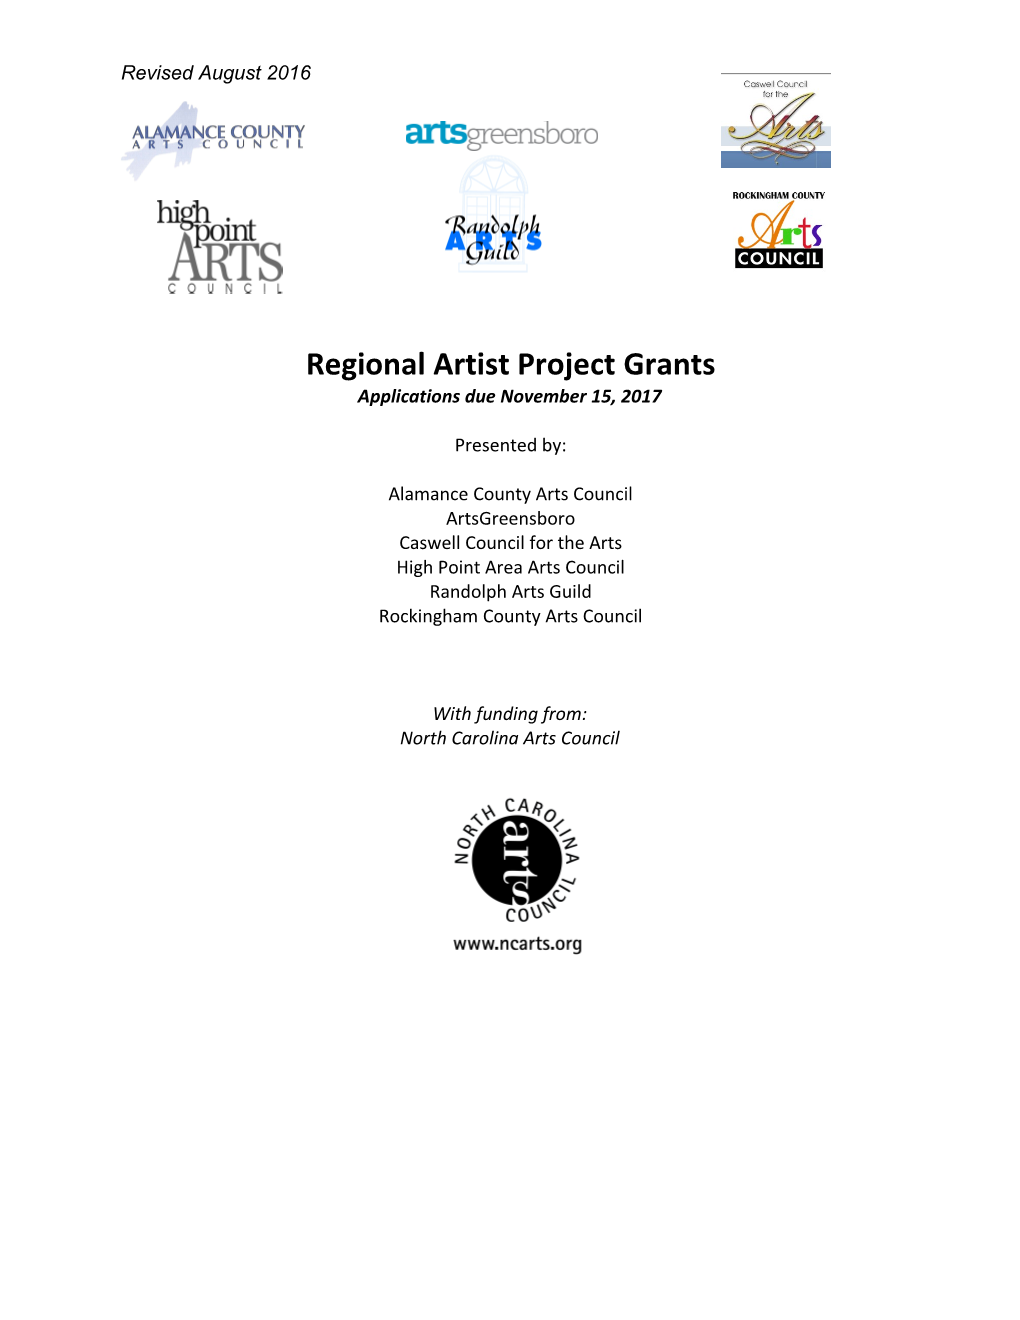 Regional Artist Project Grants Application Packet (Rev. 8/2016)